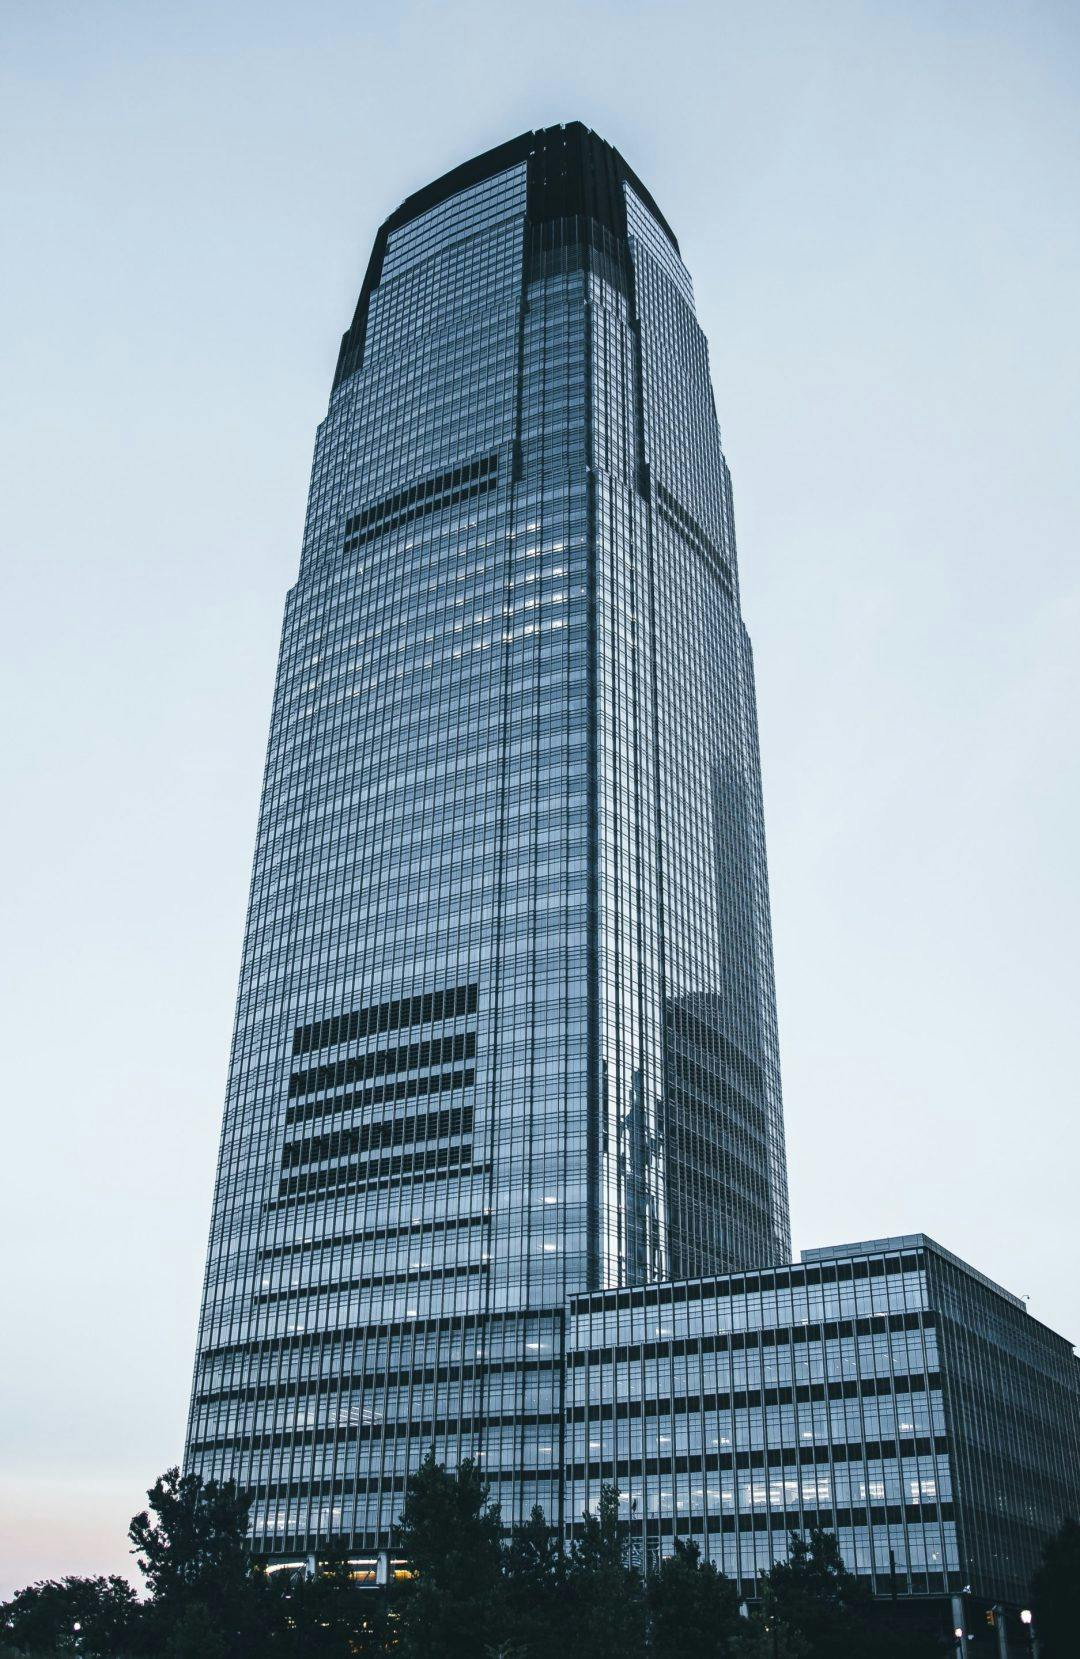 A skyscraper in Jersey City